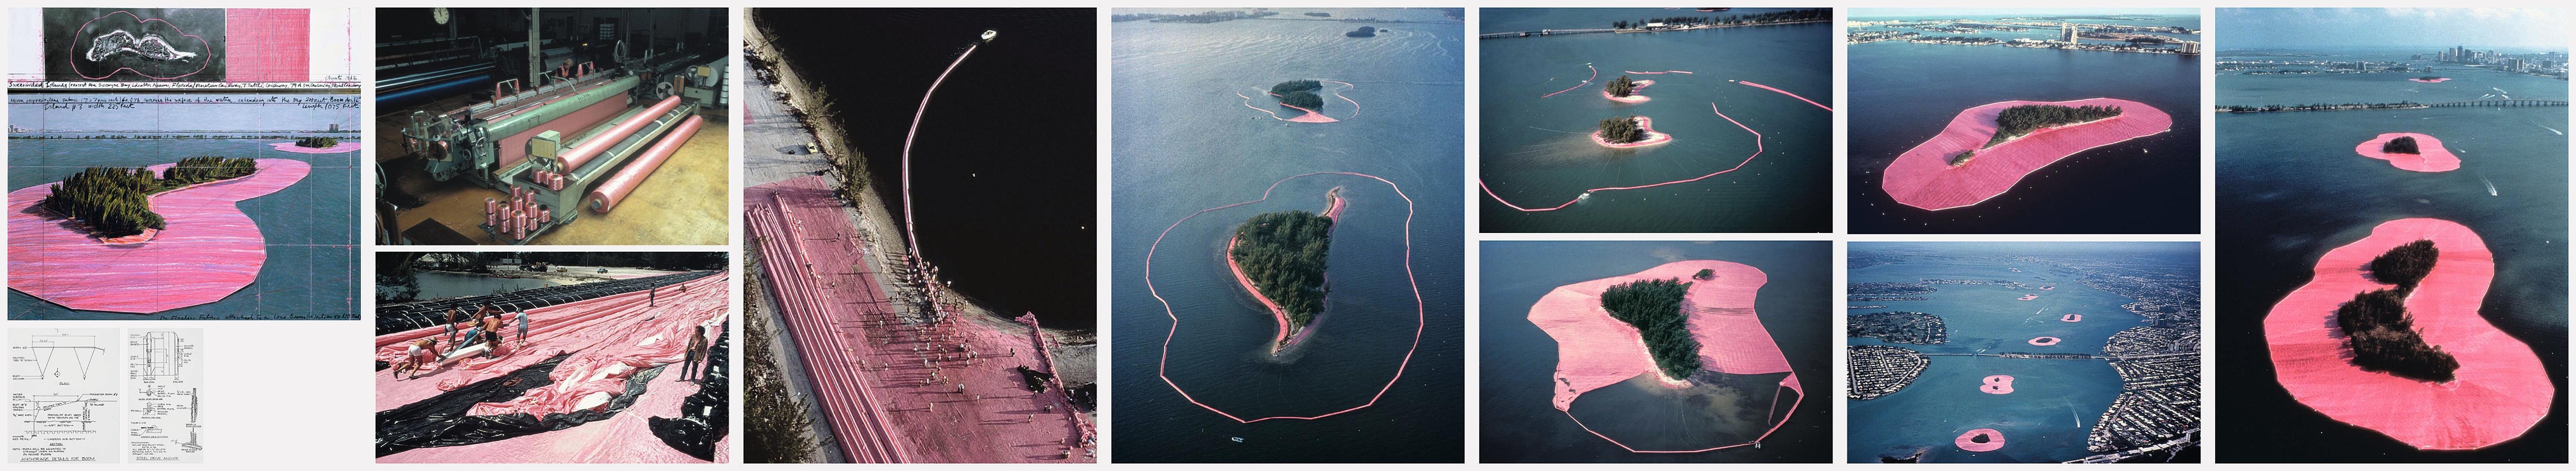 Surrounded Islands, Leporello, Concept Artist, Land Art, Contemporary Art